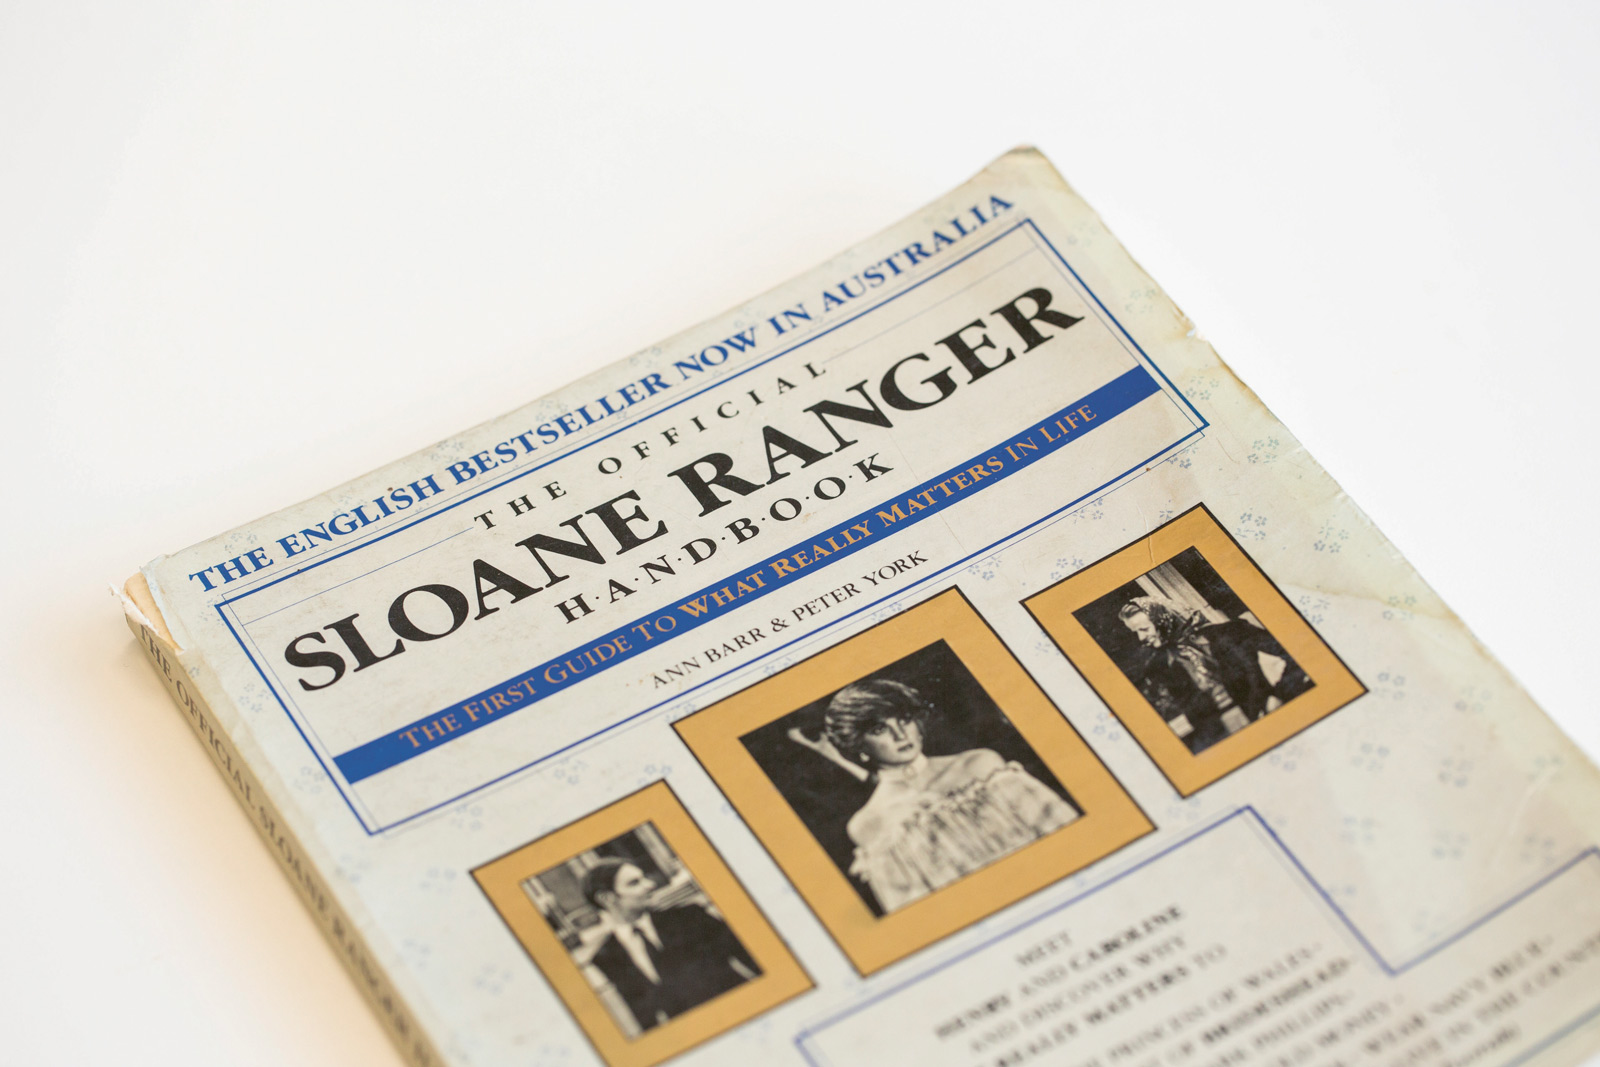 Official Sloane Ranger Handbook